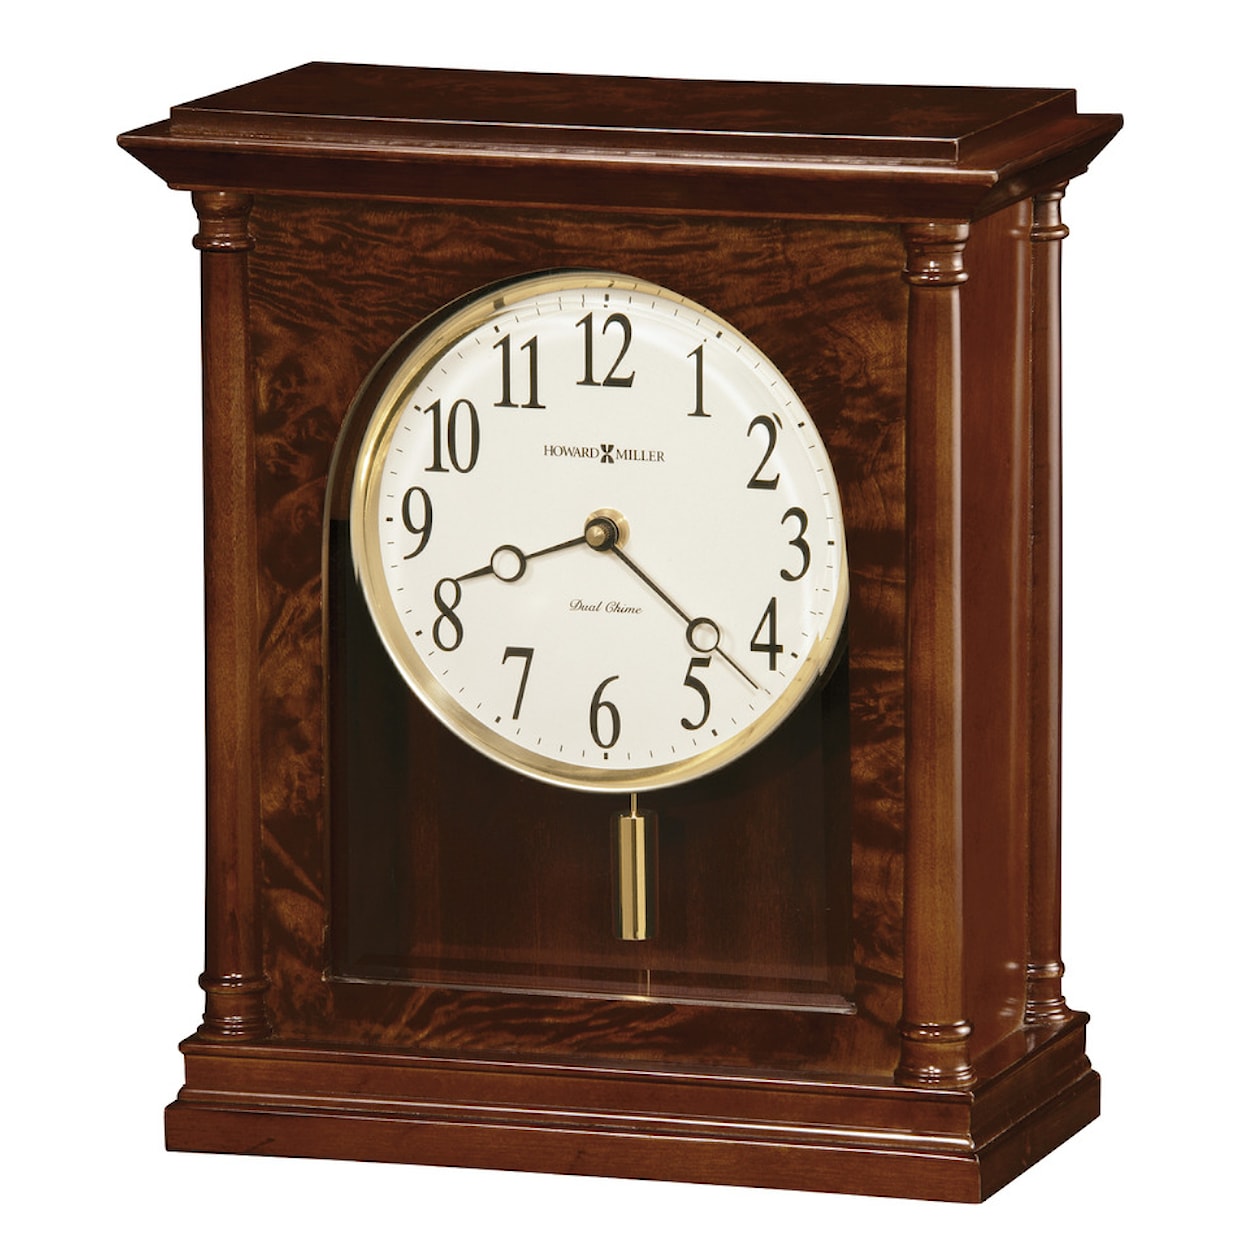 Howard Miller Table & Mantel Clocks Candice Mantel Clock